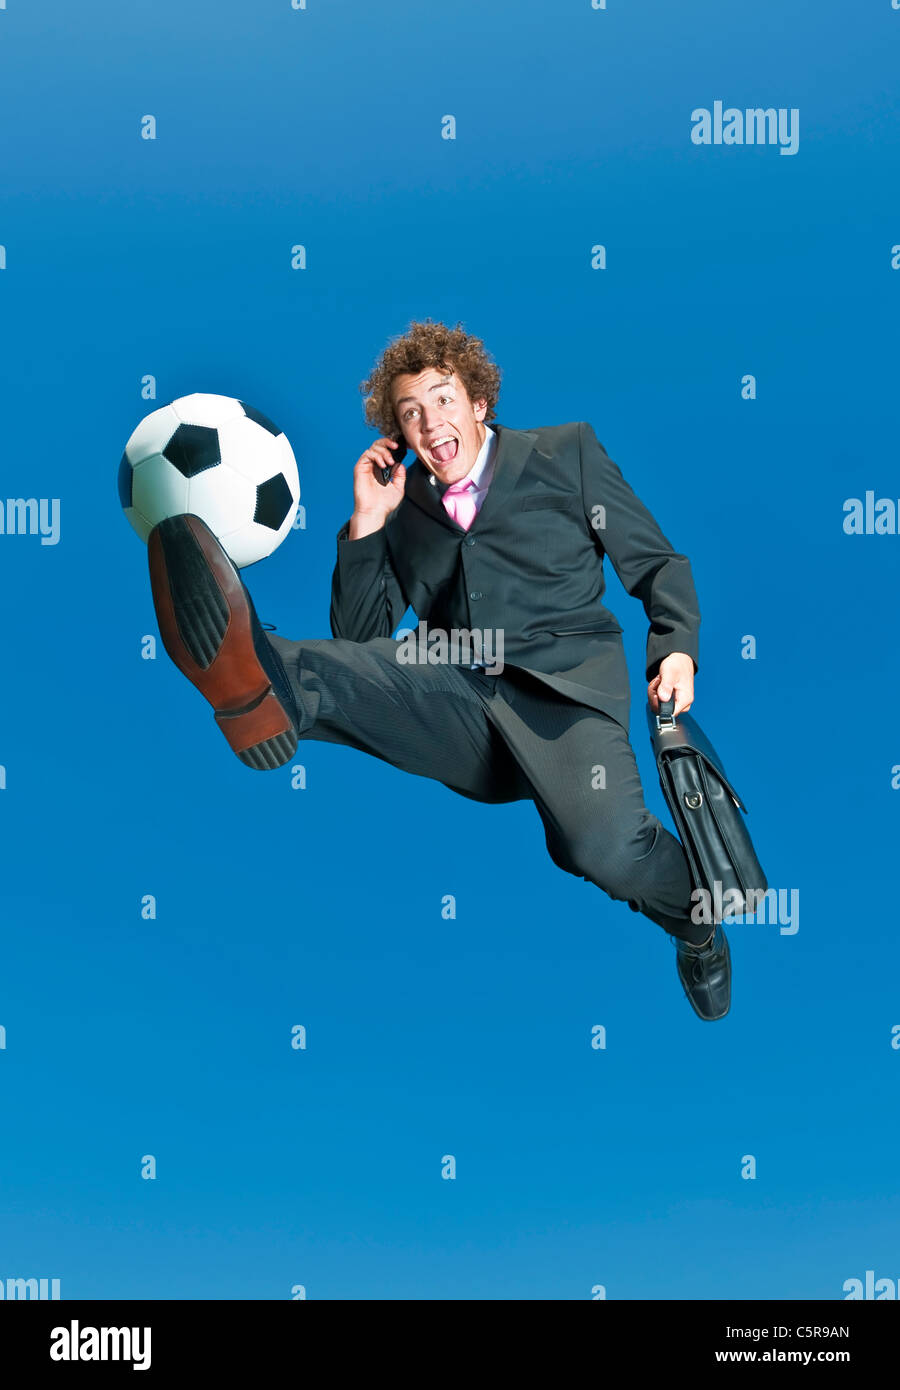 A businessman on a cell phone kicks ball. Stock Photo